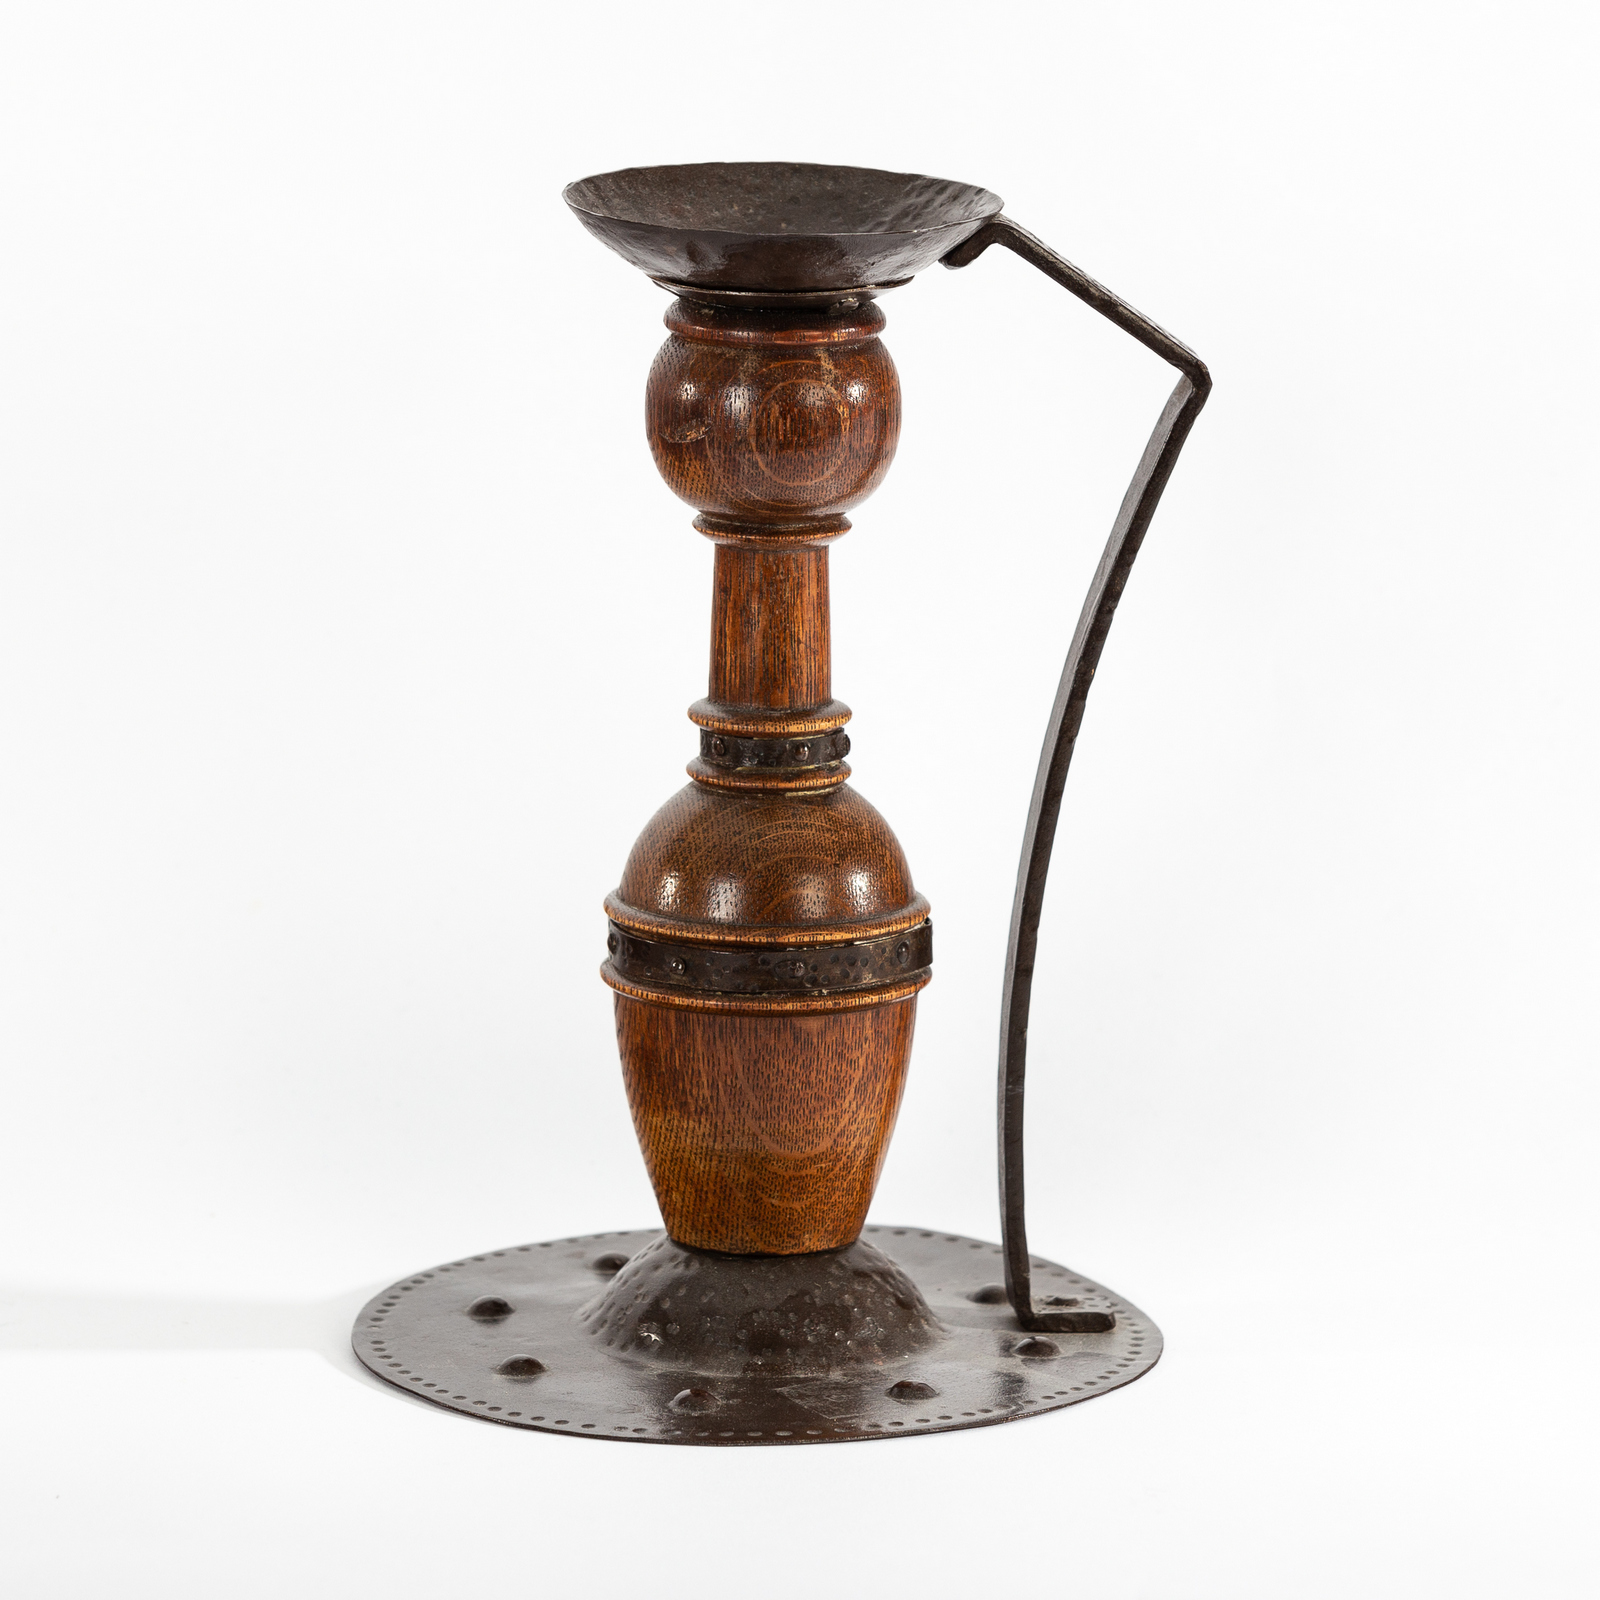 A Jugendstil copper and wood candlestick by Goberg, - Image 2 of 2